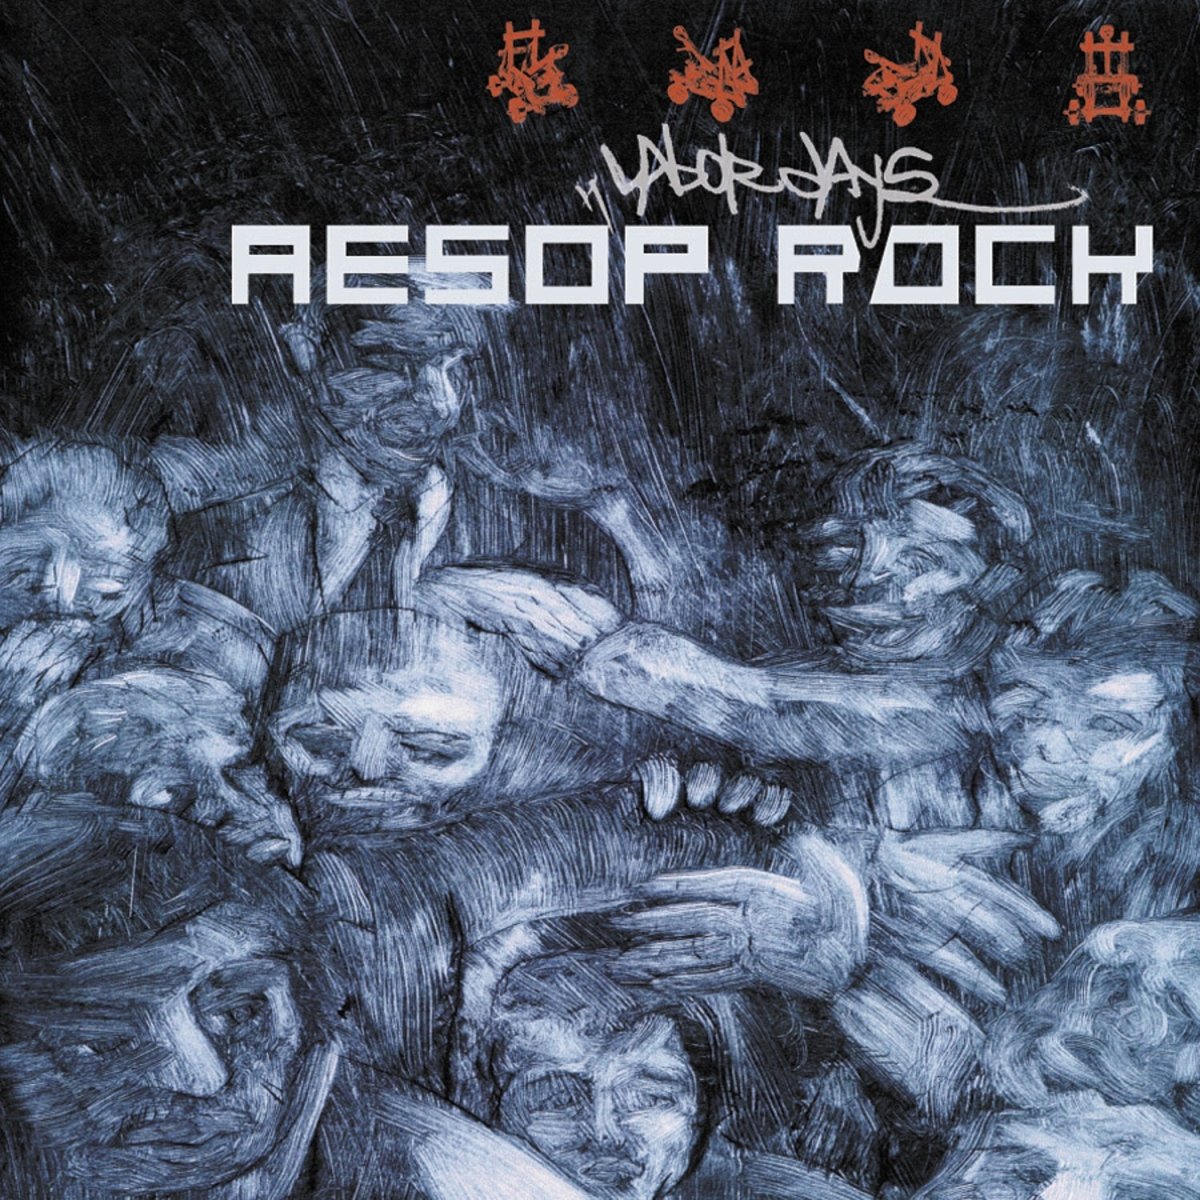 Aesop Rock - Labor Days [Vinyl]